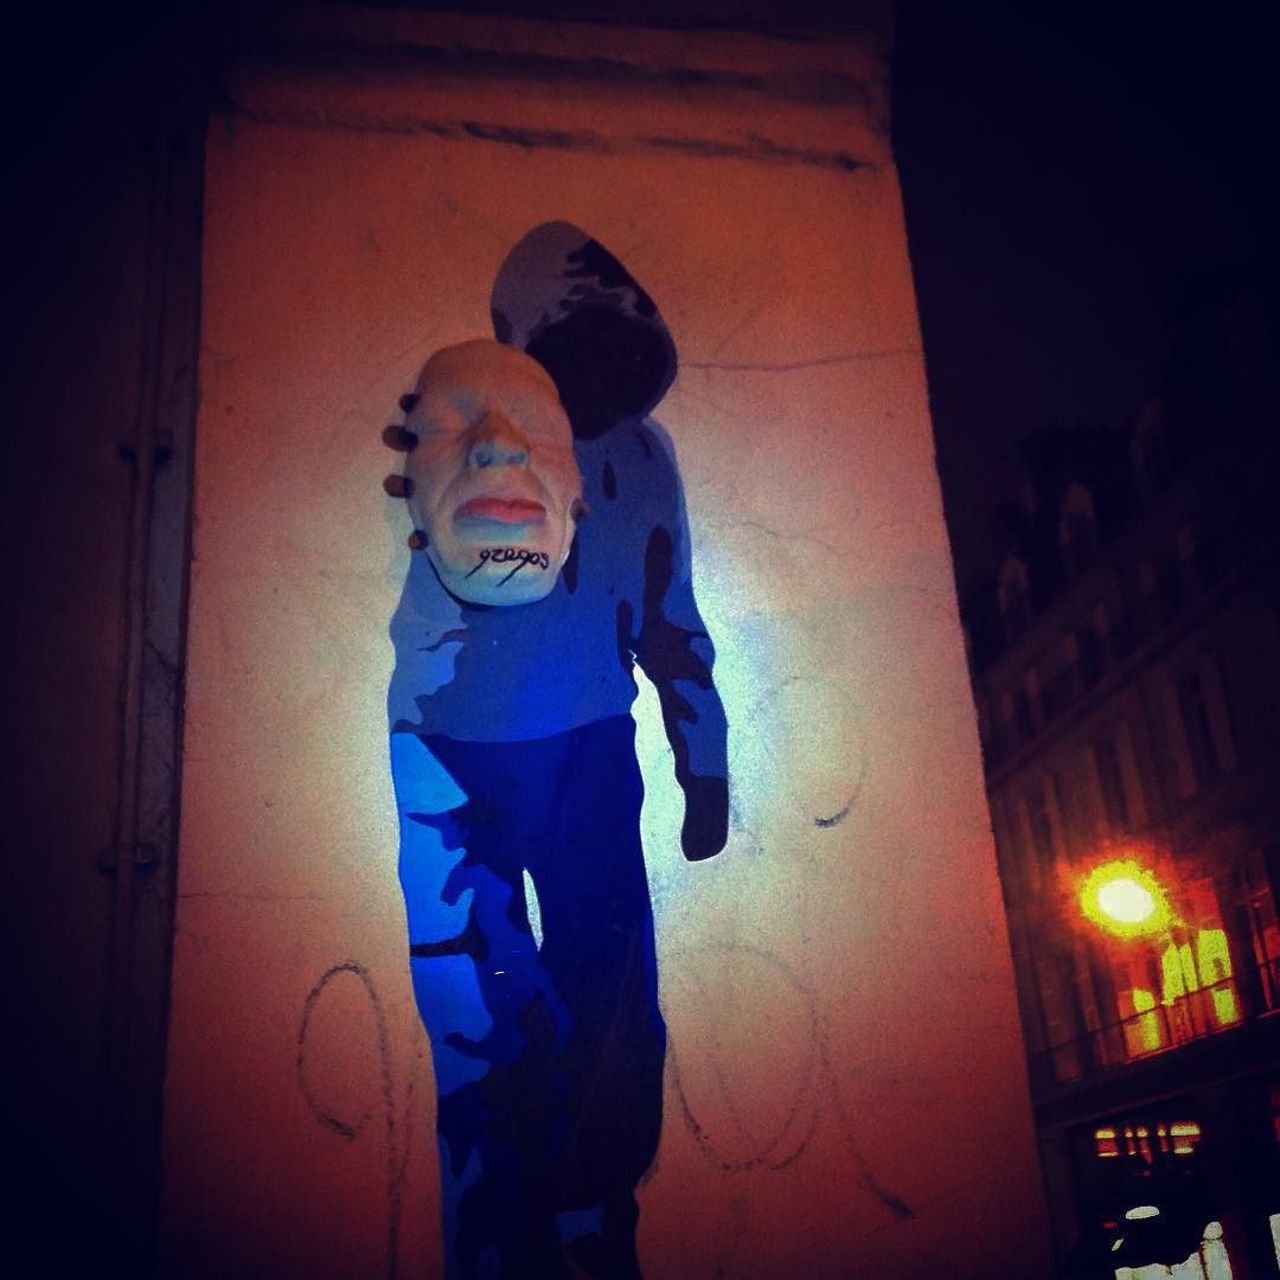 #Paris #graffiti photo by @stefetlinda http://ift.tt/1i8fjUb #StreetArt https://t.co/tIl1tRFmrU